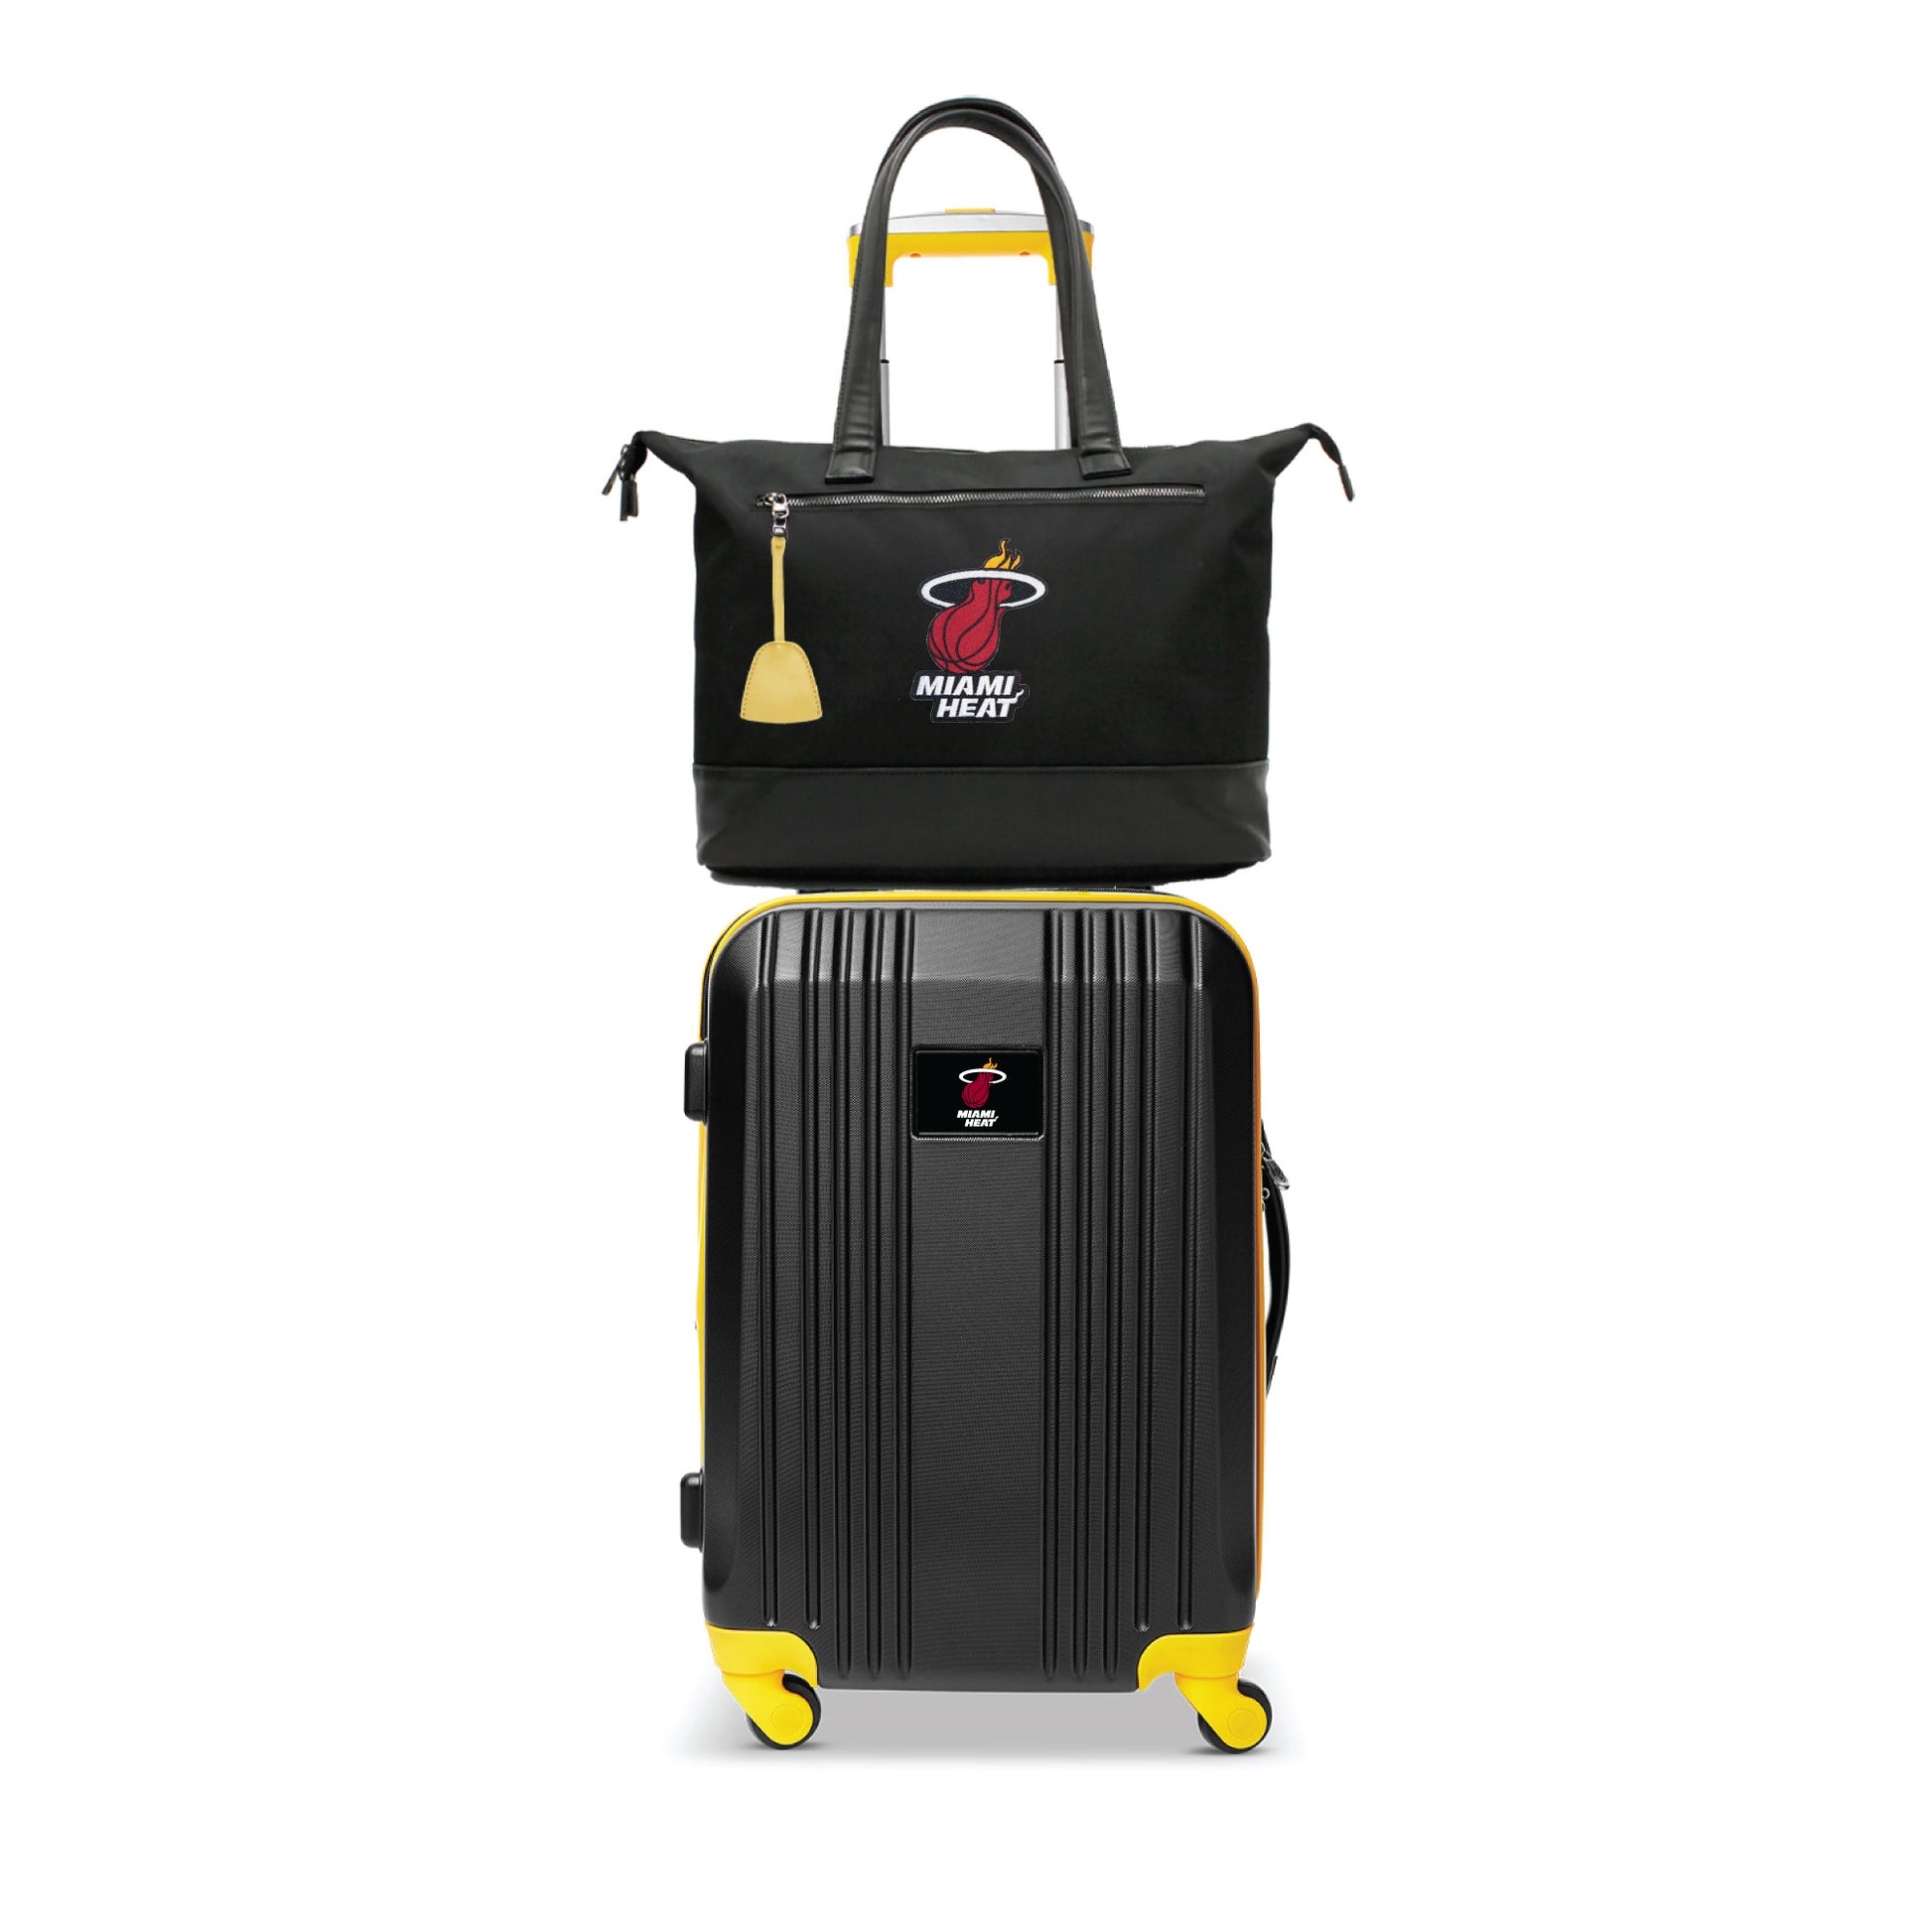 Miami Heat Premium Laptop Tote Bag and Luggage Set